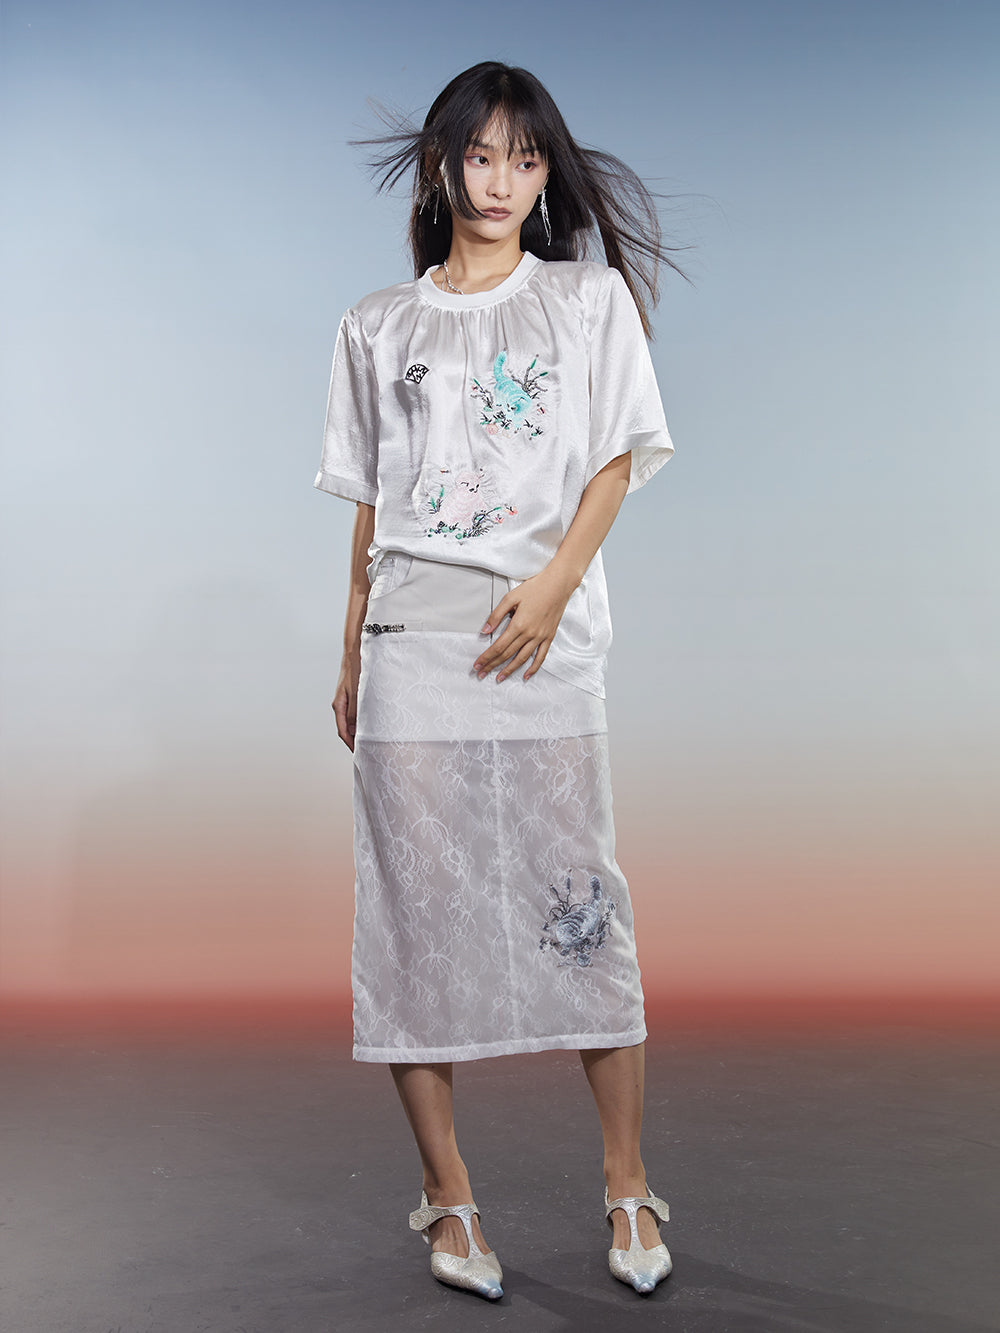 MUKZIN Charming Slim Fit Paneled Lace High-quality Skirt